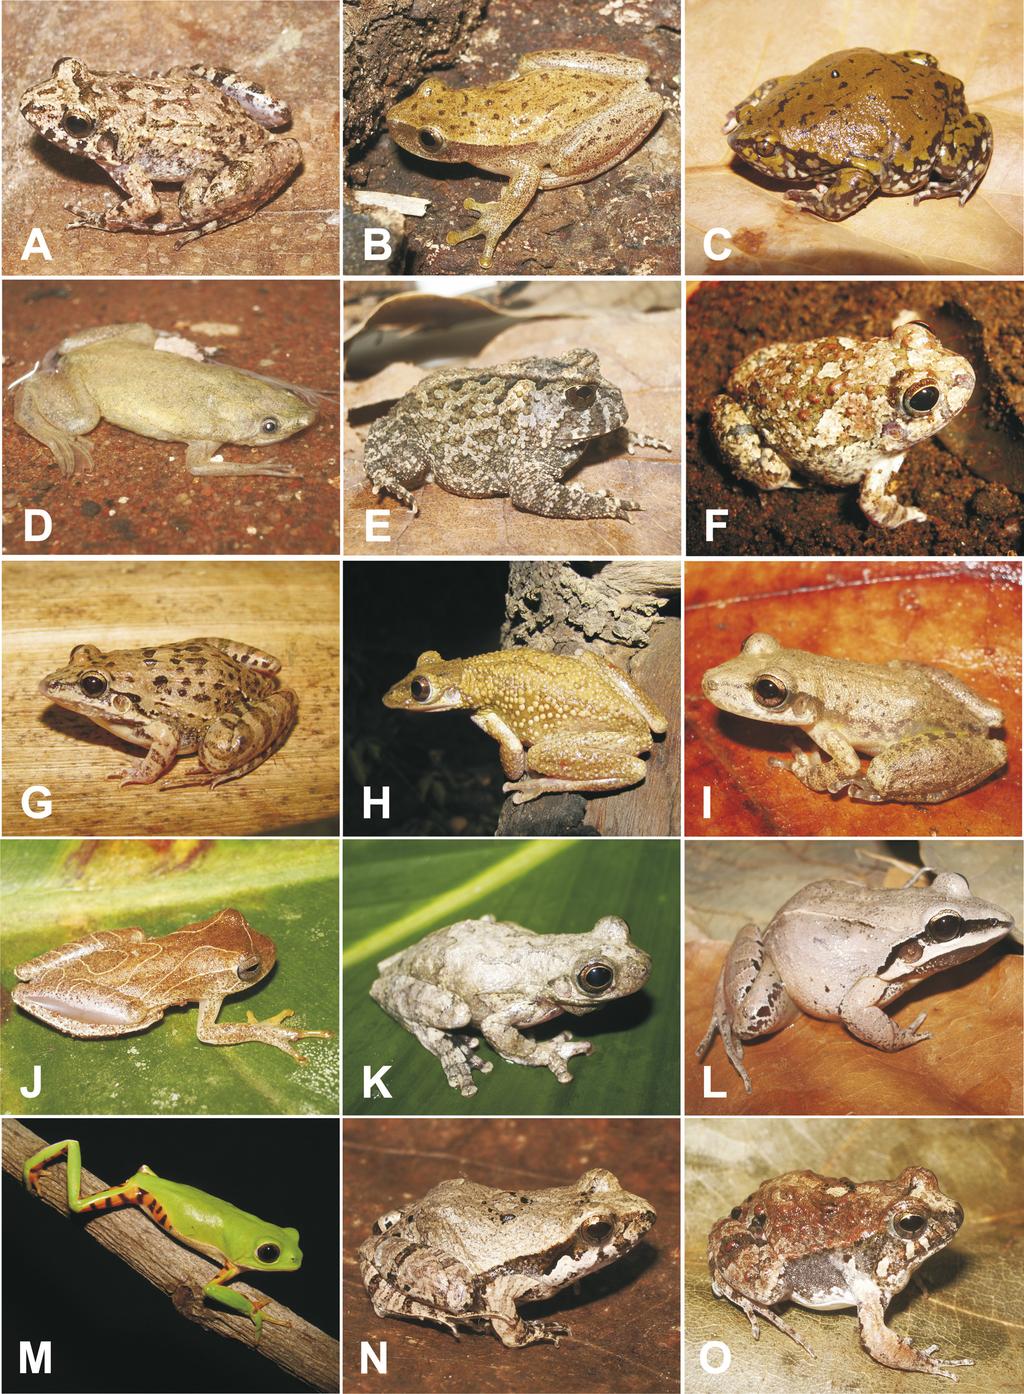 Samuel Cardozo Ribeiro et al. Fig. 3. Species of anuran amphibians from Araripe bioregion, Northeastern Brazil. A = Leptodactylus sp. (aff.